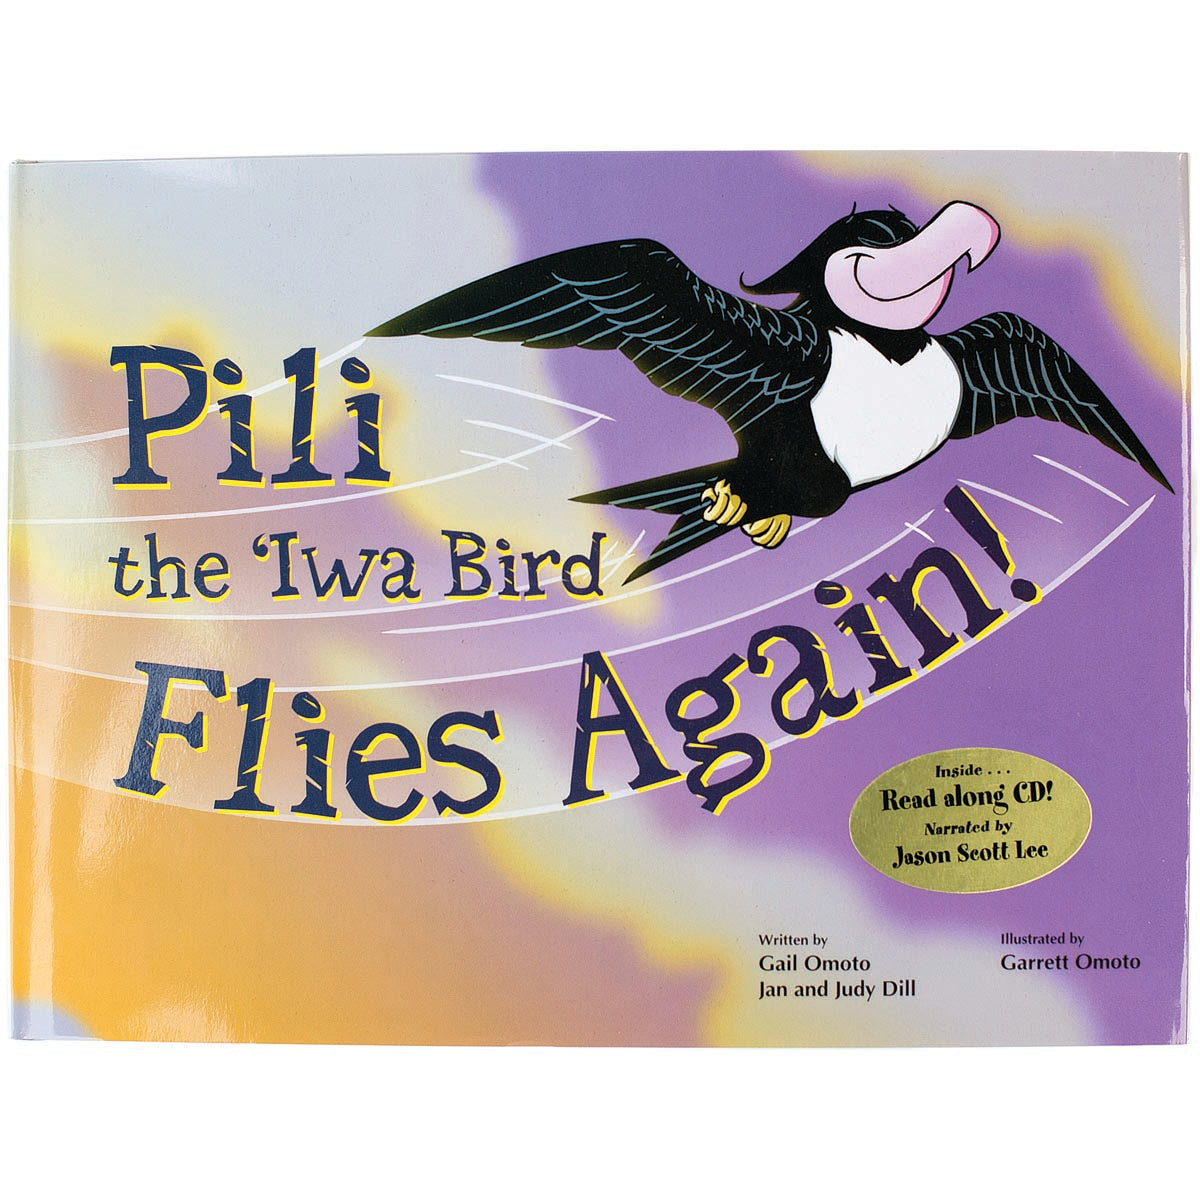 Pili the ʻIwa Bird Flies Again!